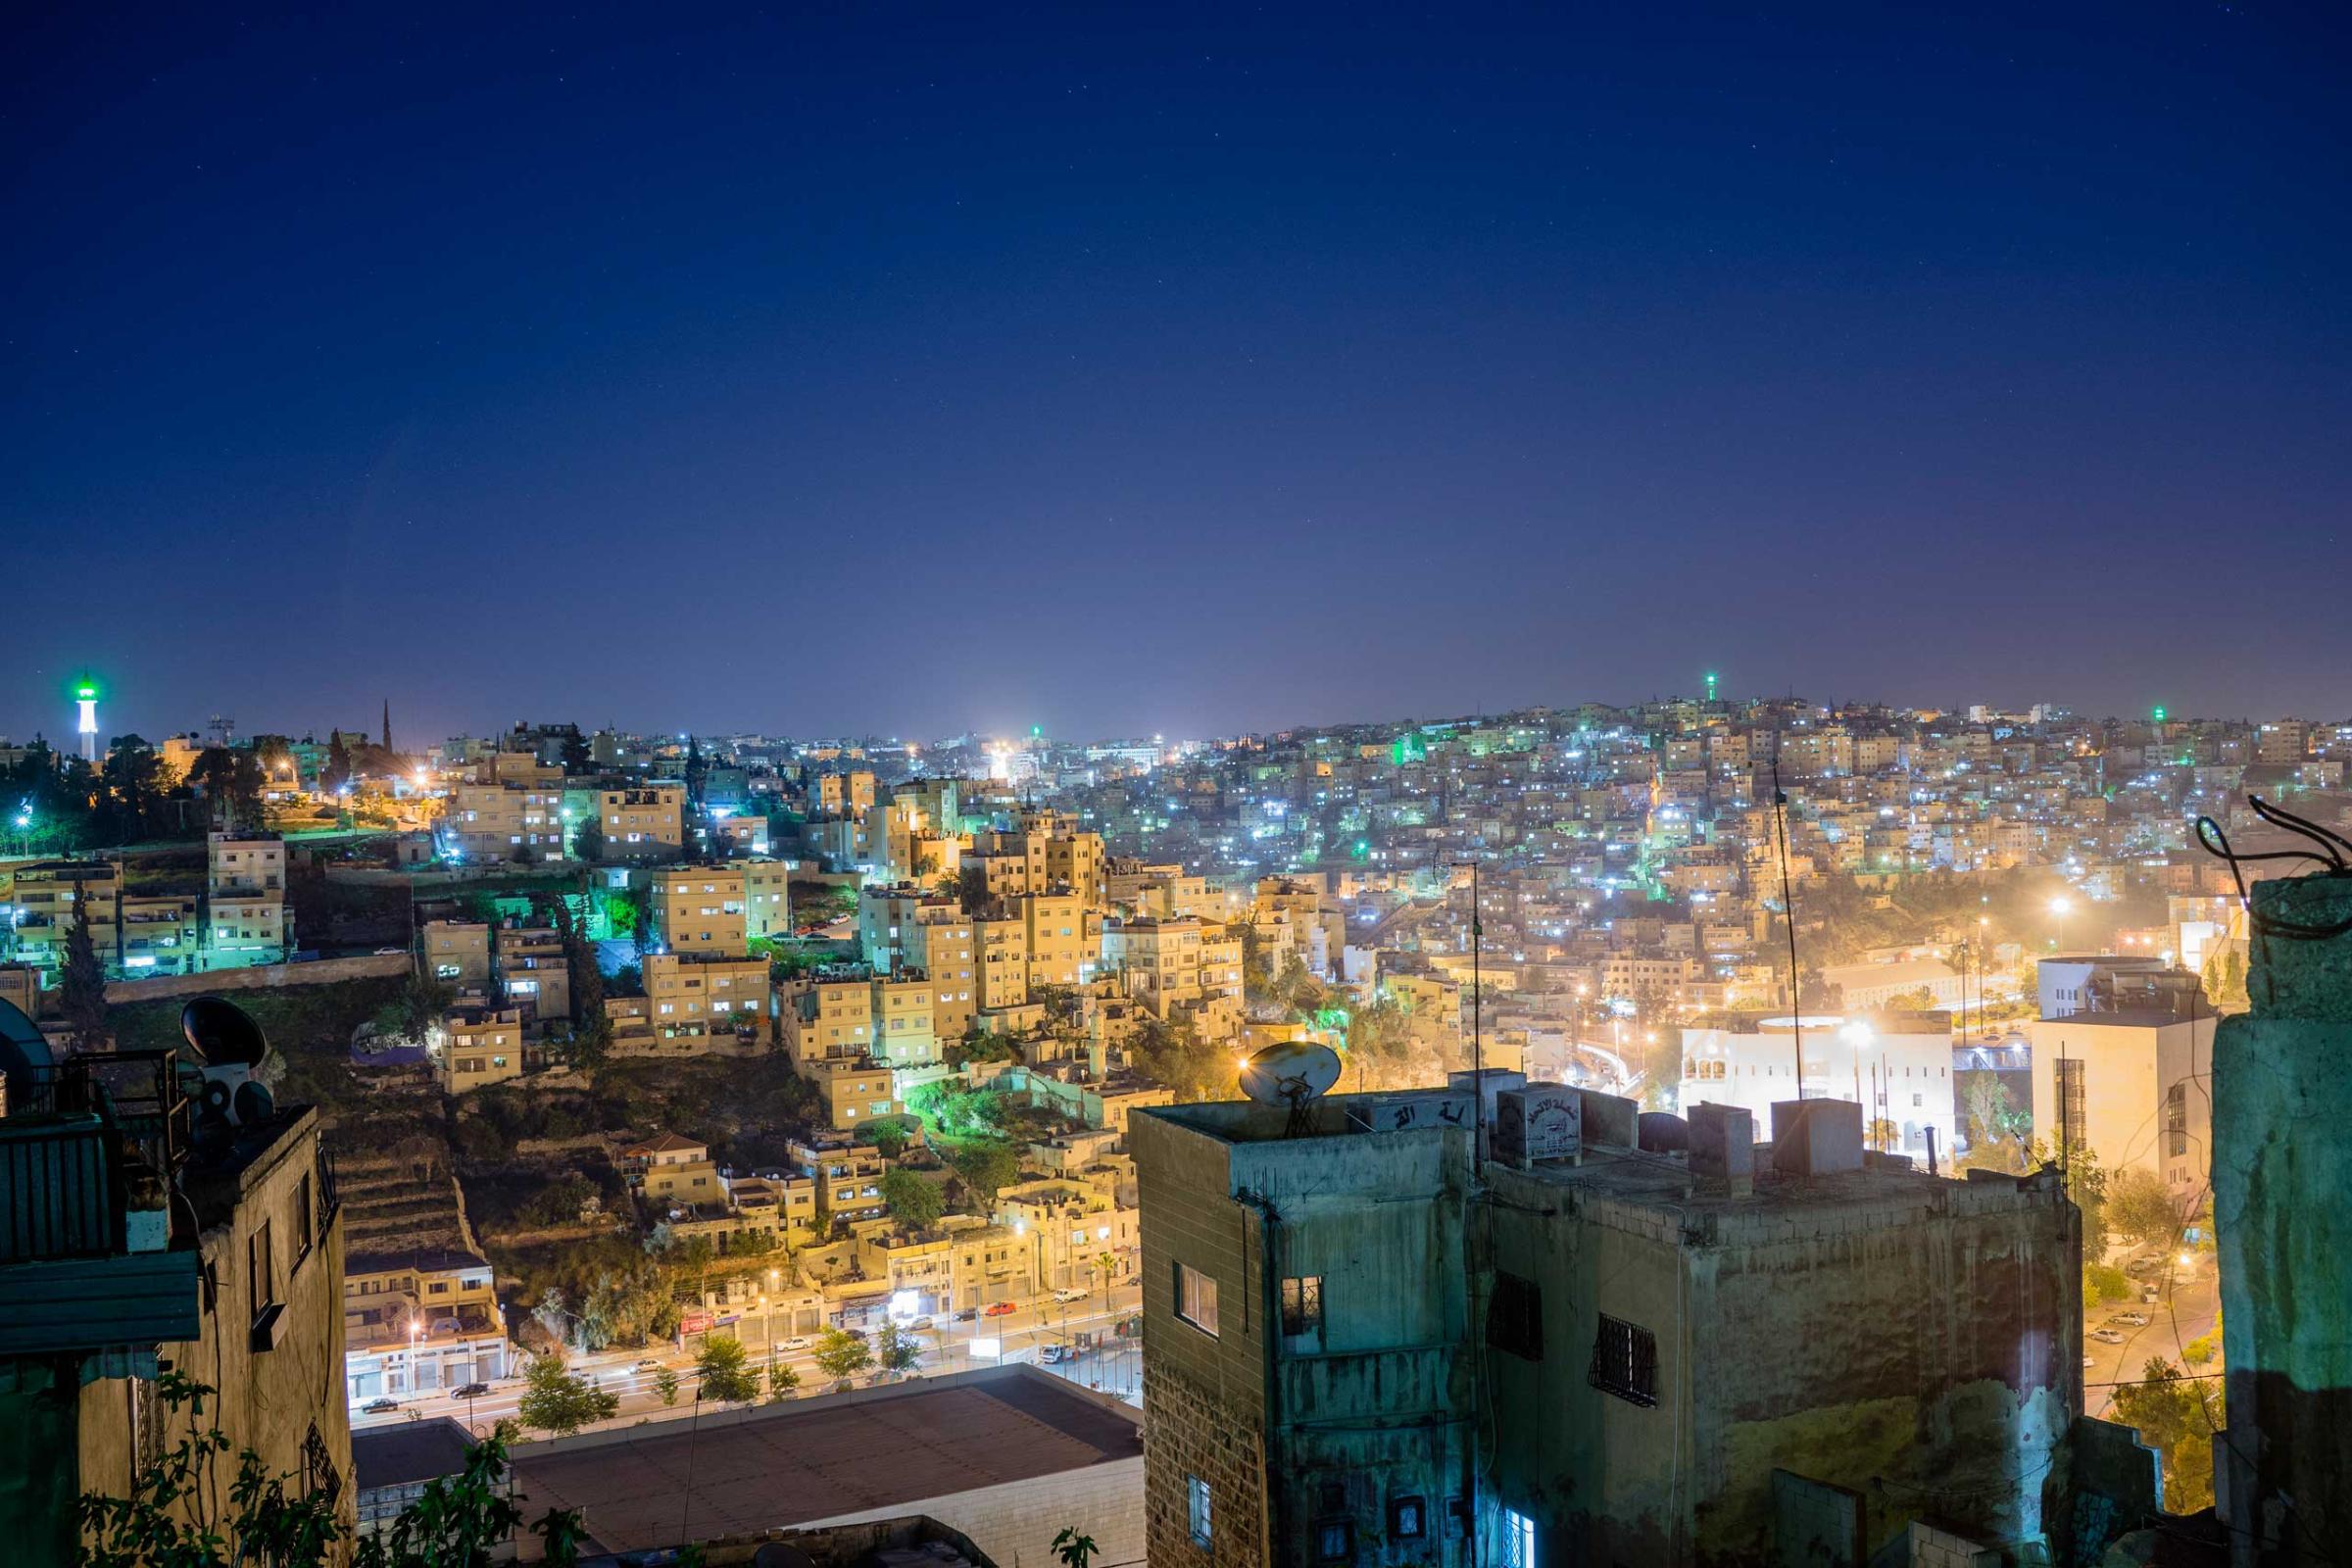 Amman, Jordan at night.